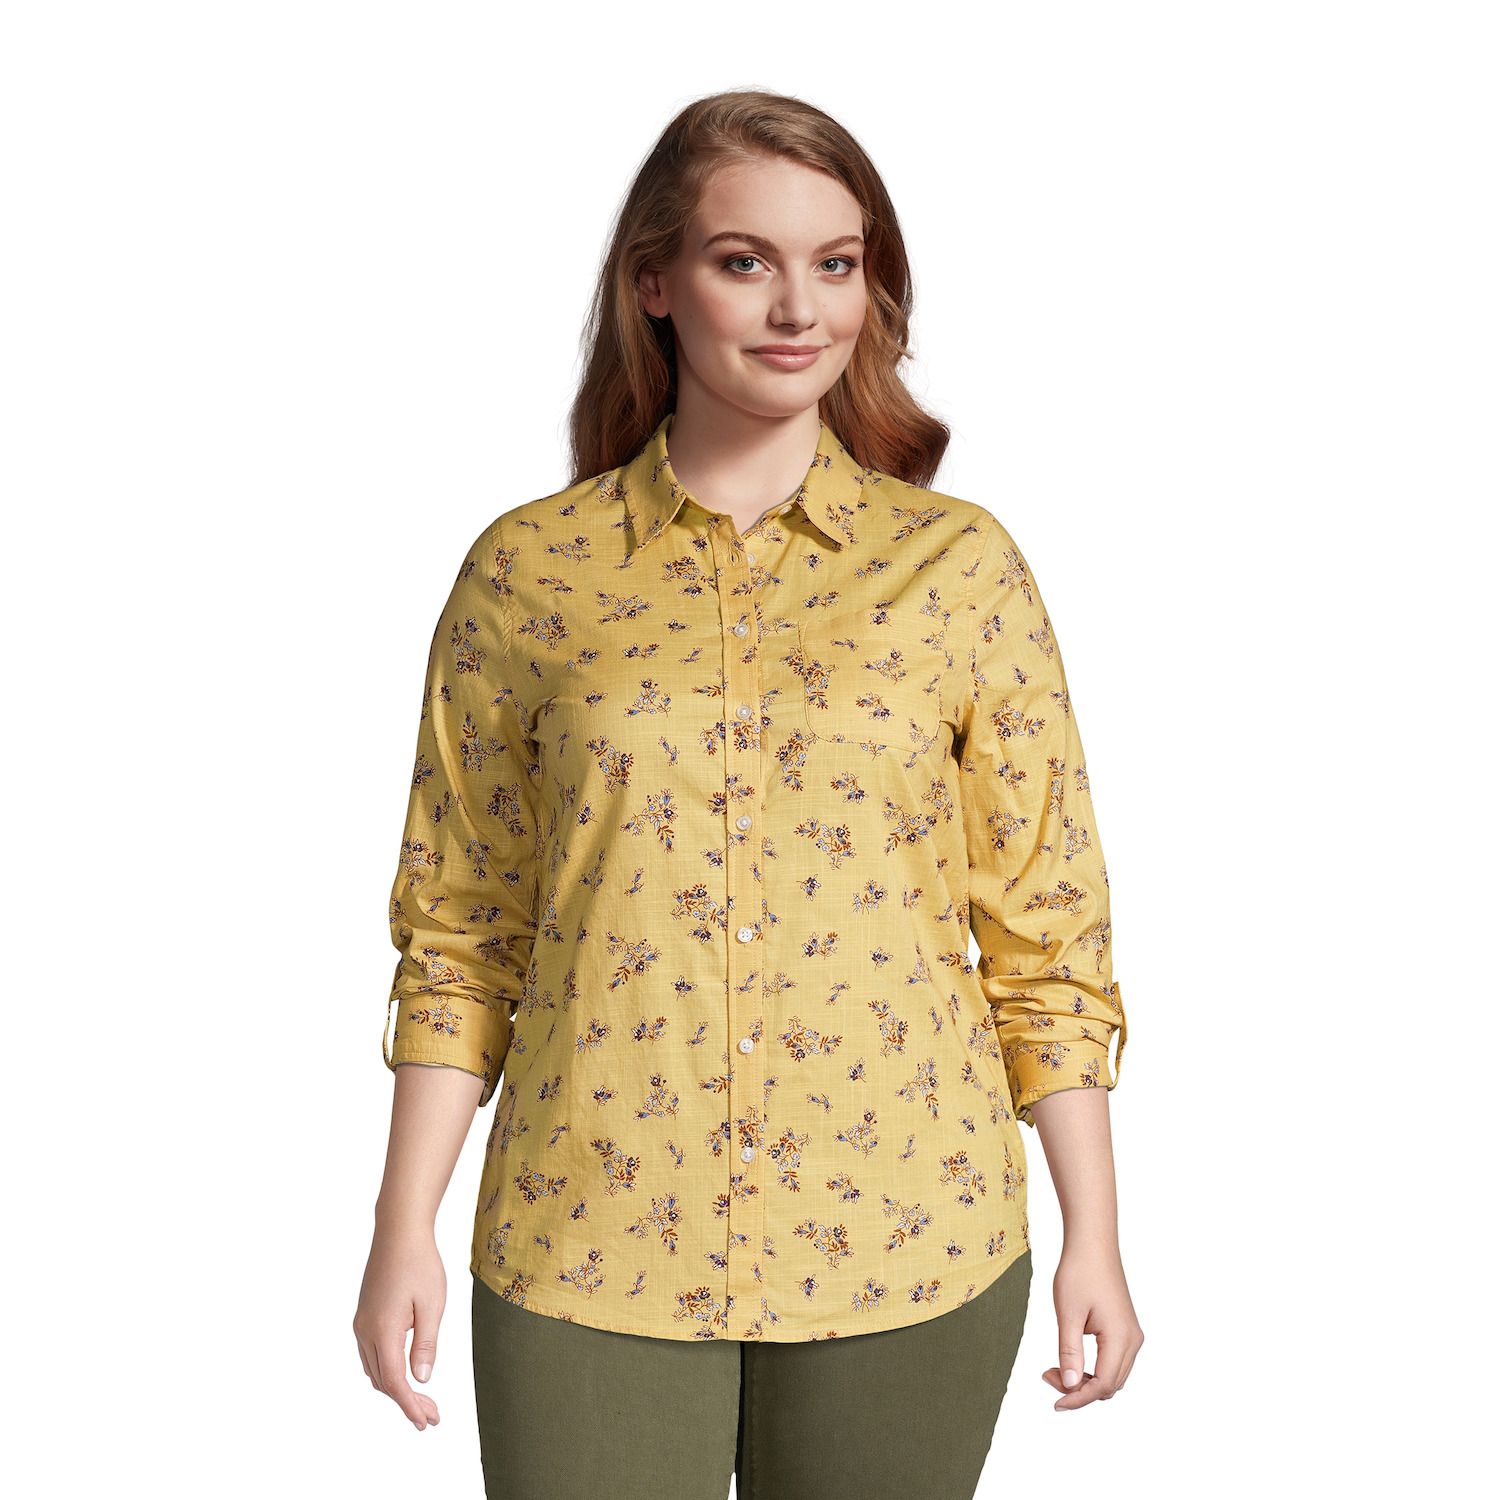 women's plus size yellow tops